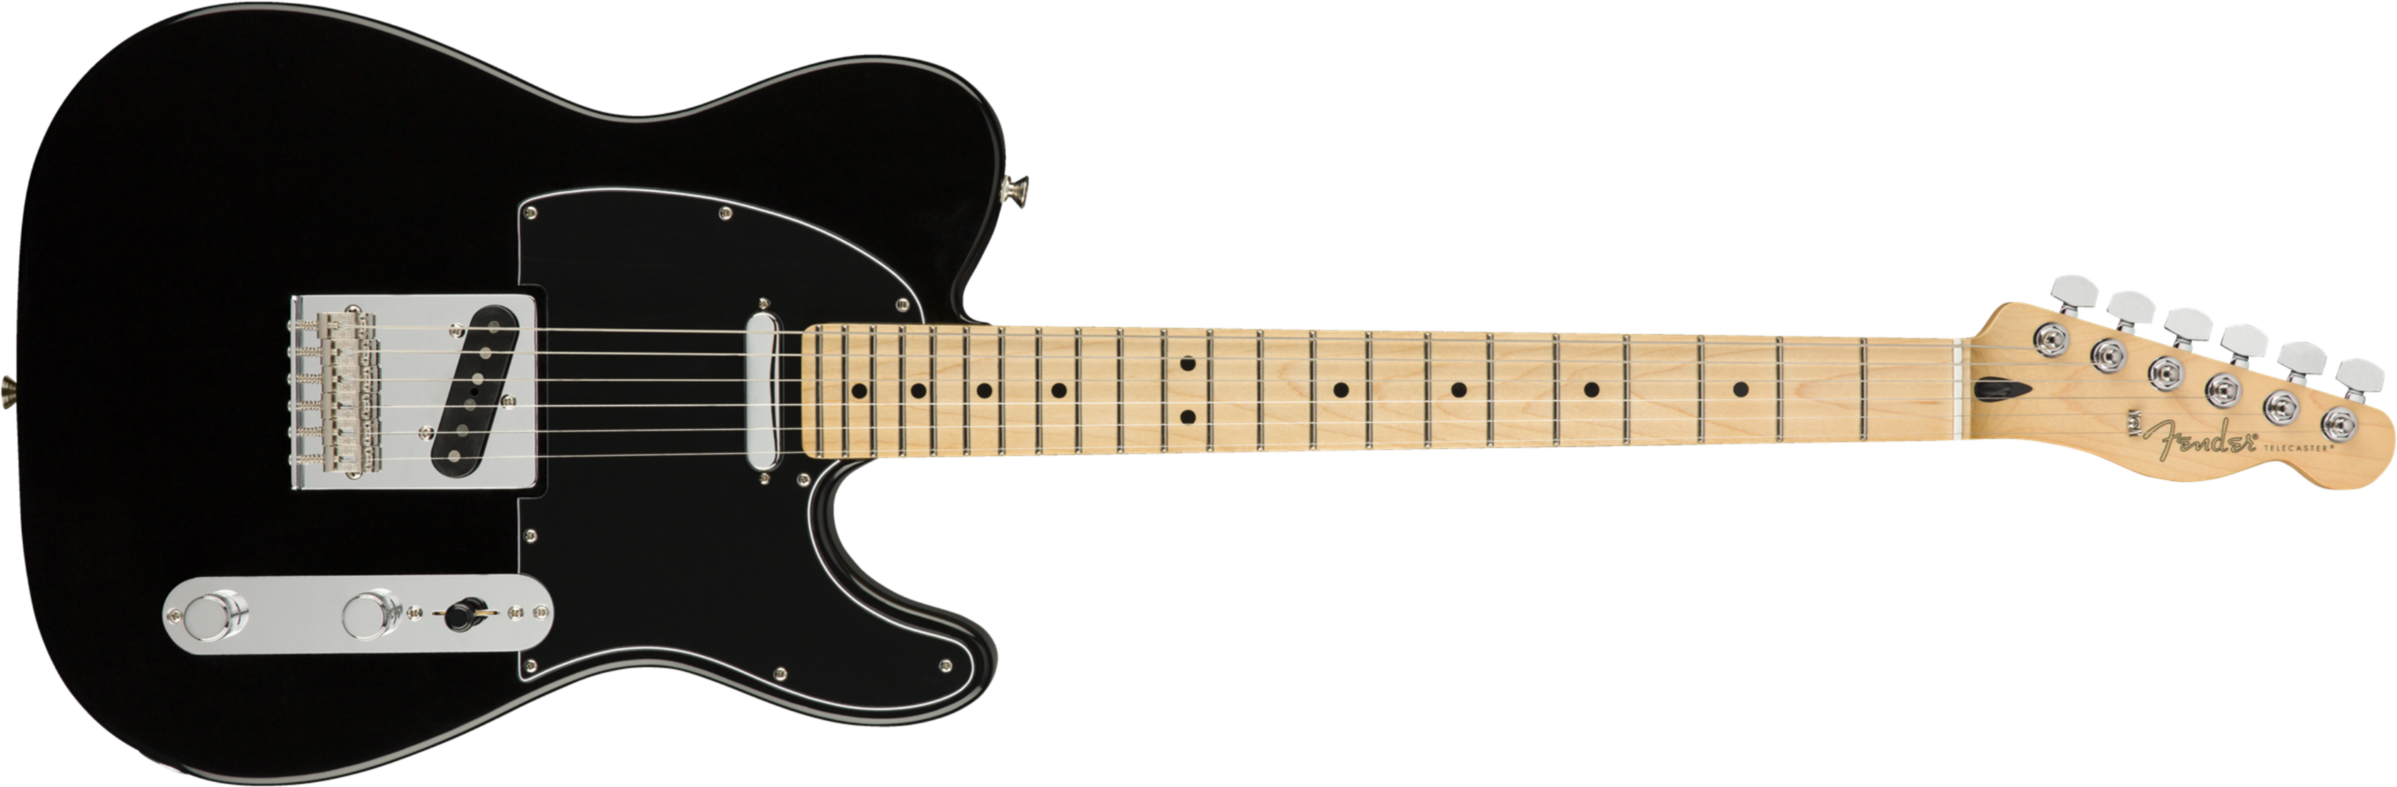 Fender Tele Player Mex Mn - Black - Tel shape electric guitar - Main picture